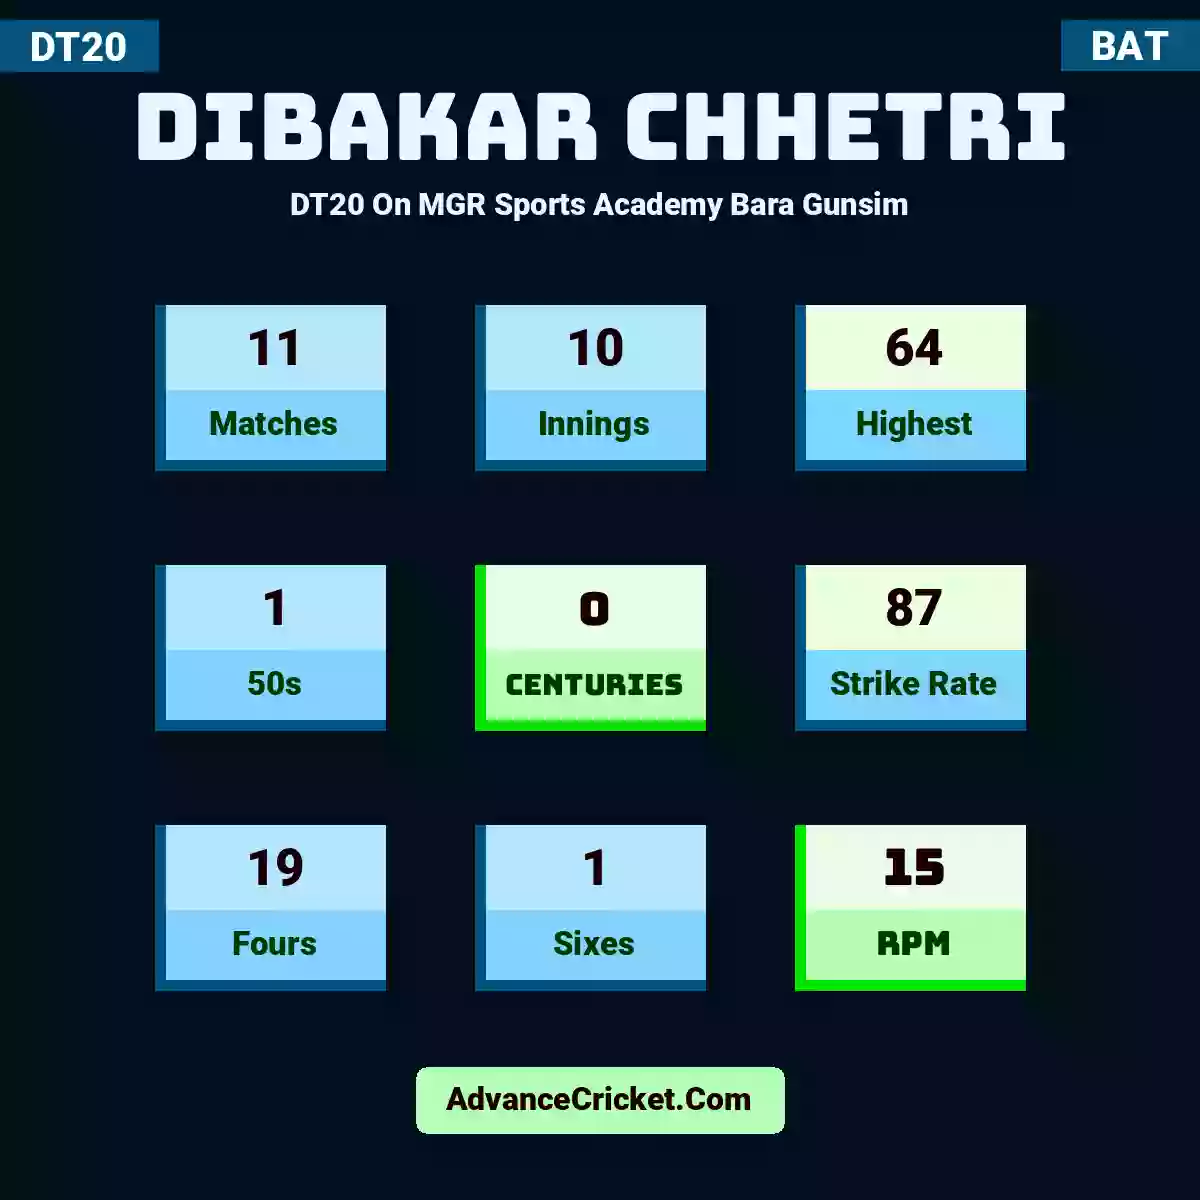 Dibakar Chhetri DT20  On MGR Sports Academy Bara Gunsim, Dibakar Chhetri played 11 matches, scored 64 runs as highest, 1 half-centuries, and 0 centuries, with a strike rate of 87. D.Chhetri hit 19 fours and 1 sixes, with an RPM of 15.